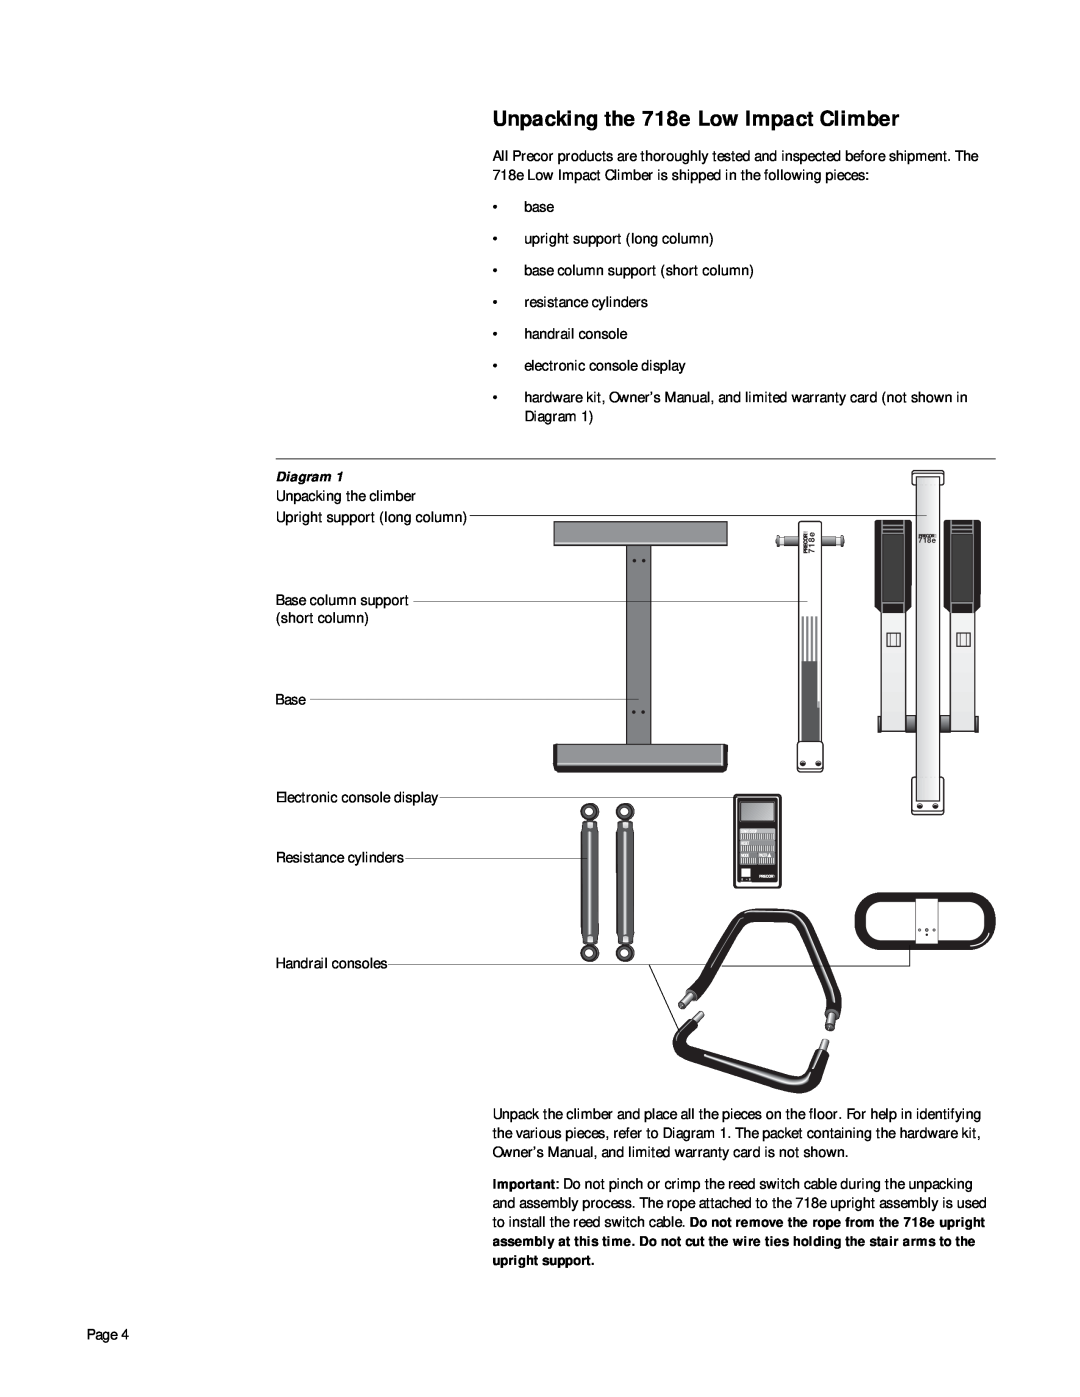 Precor owner manual Unpacking the 718e Low Impact Climber, Diagram 